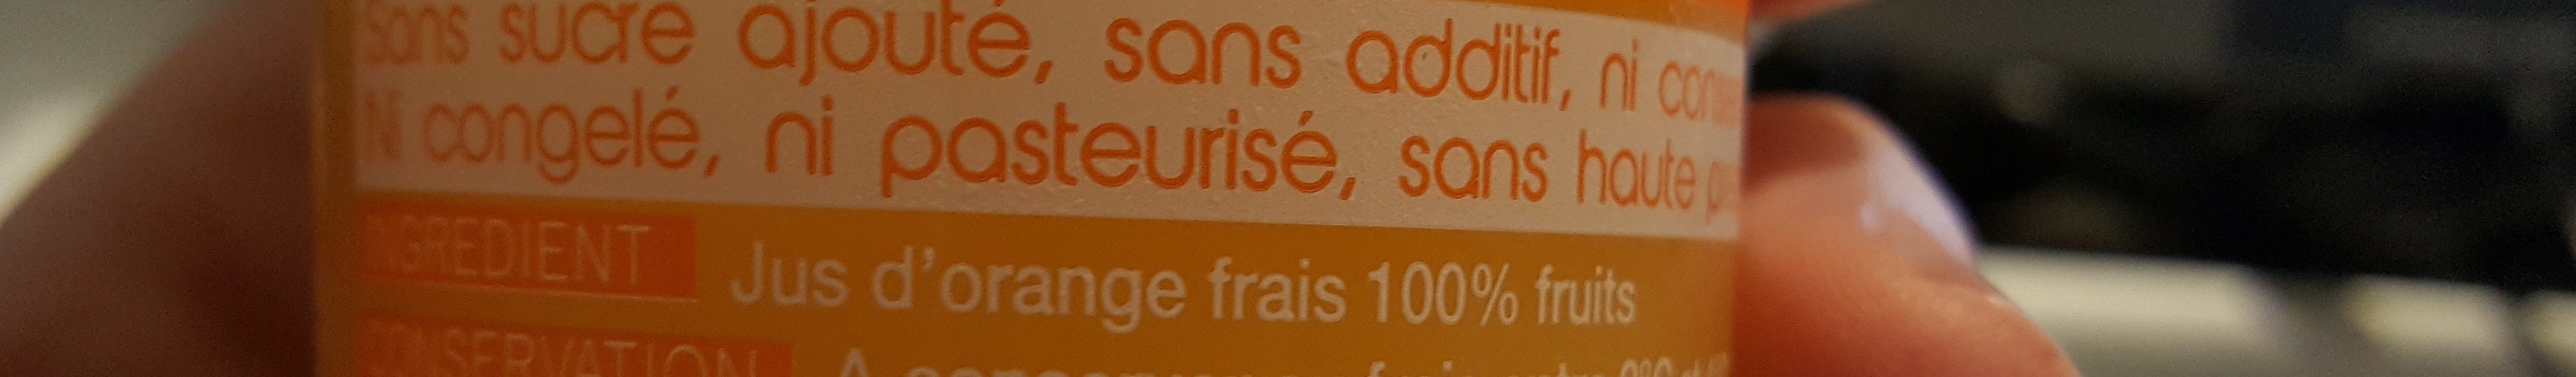 Jus d'orange frais - Ingredients - fr